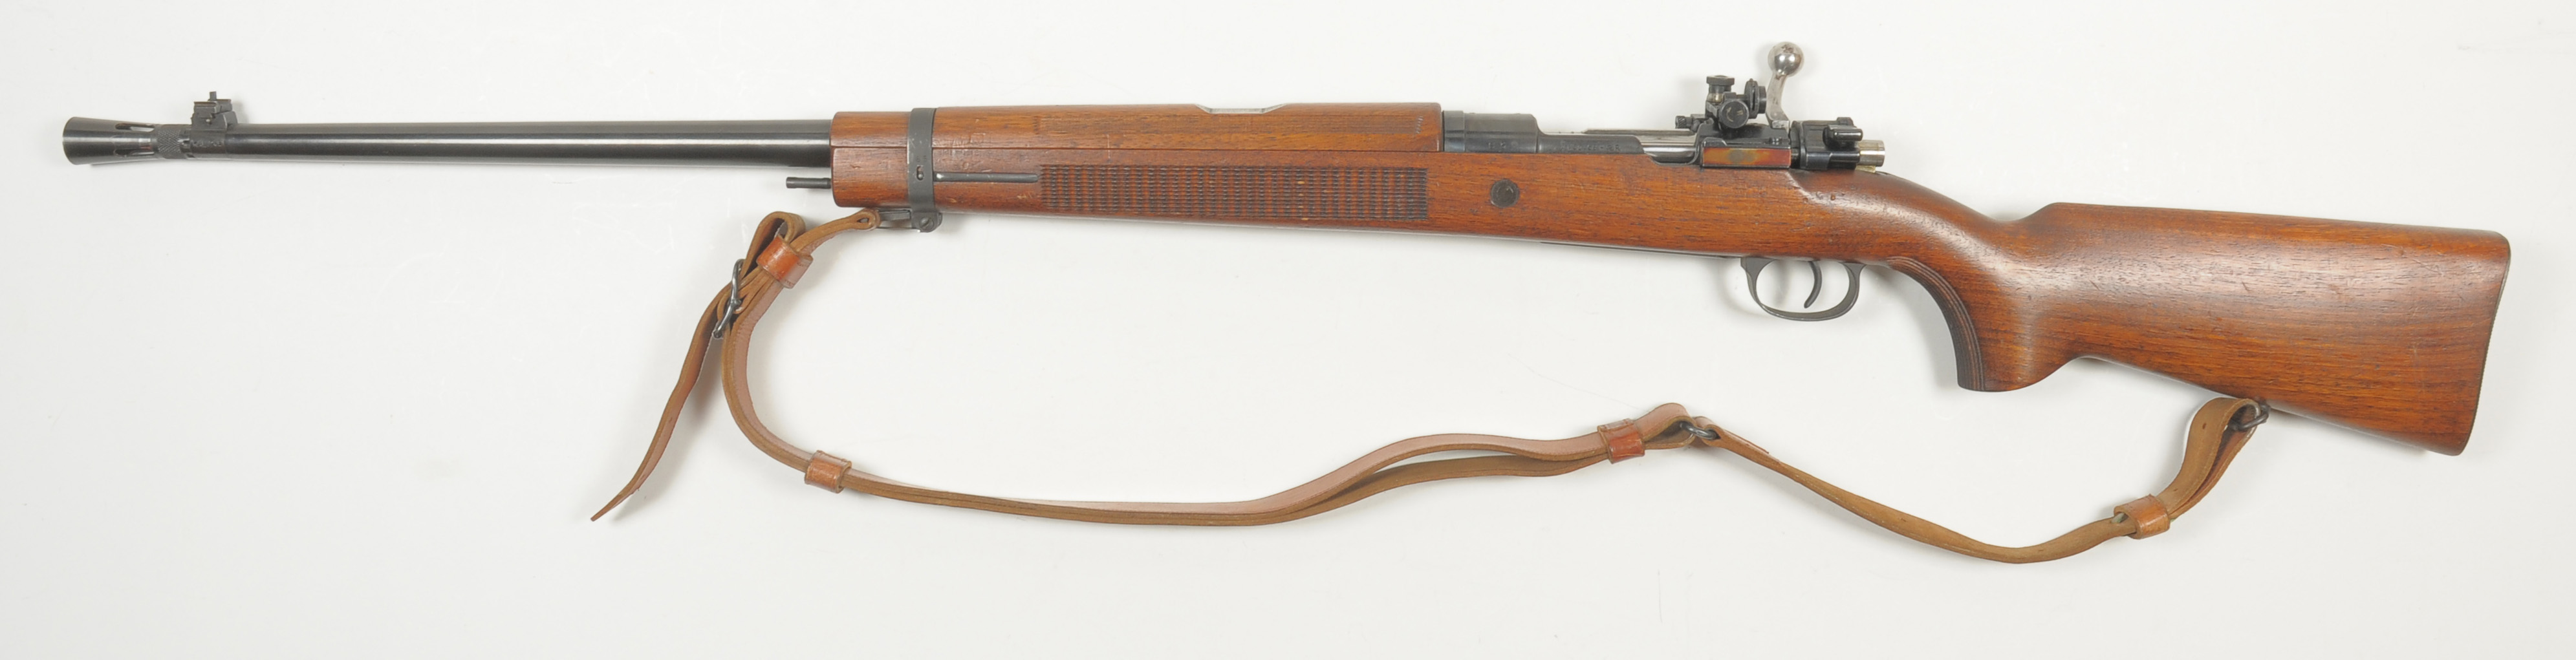 ./guns/rifle/bilder/Rifle-Kongsberg-Mauser-M58-65-2.jpg